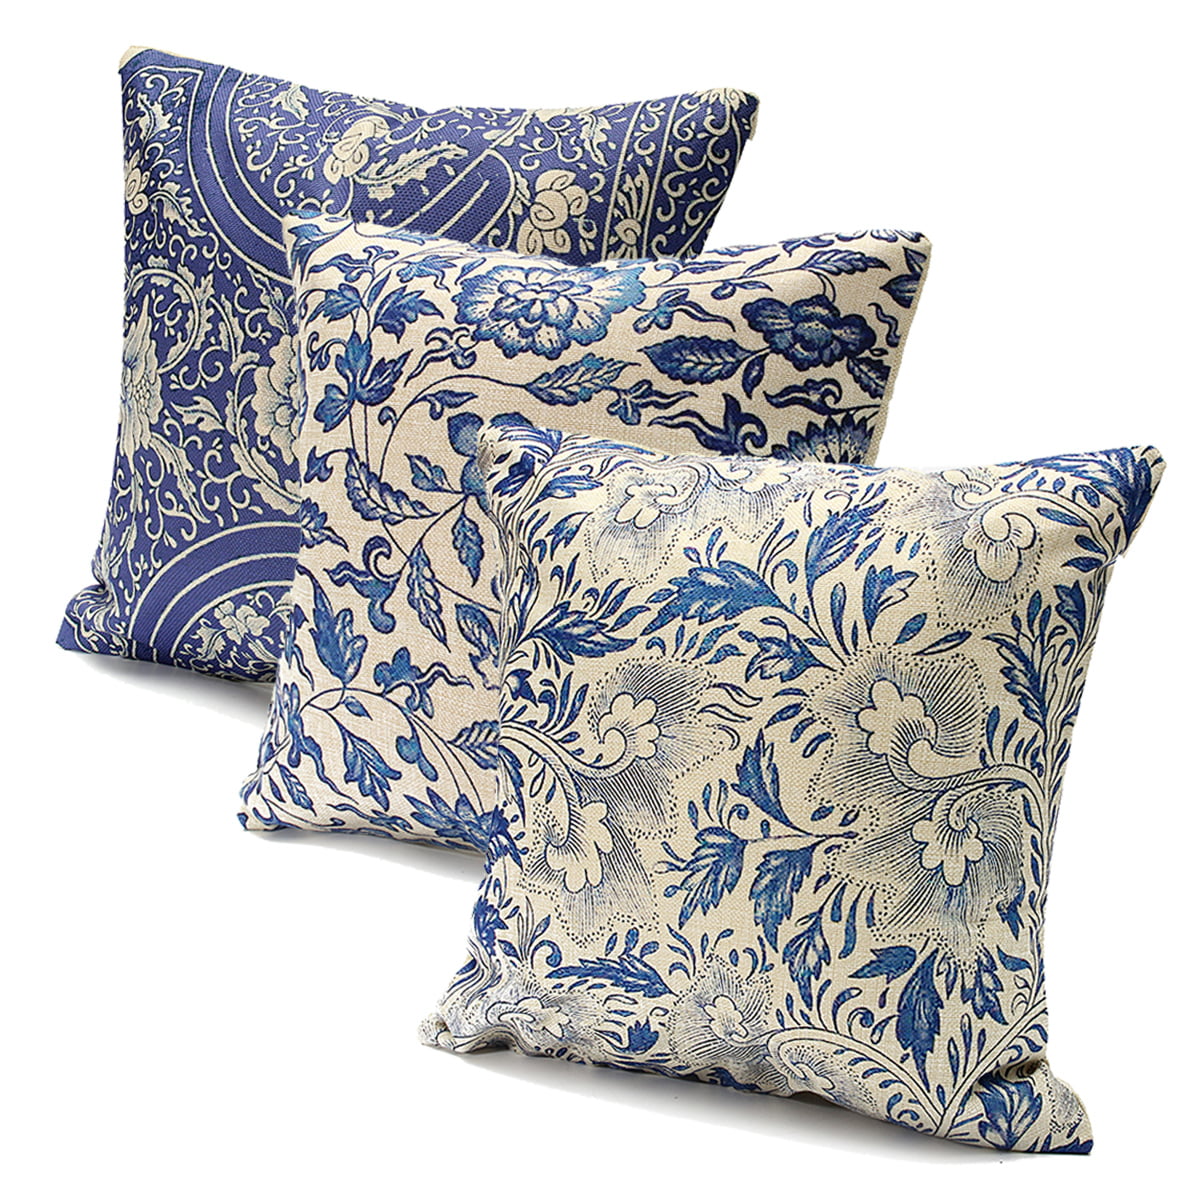 18x18inch Vintage Oriental Blue Floral Linen Decorative Throw Pillow ...